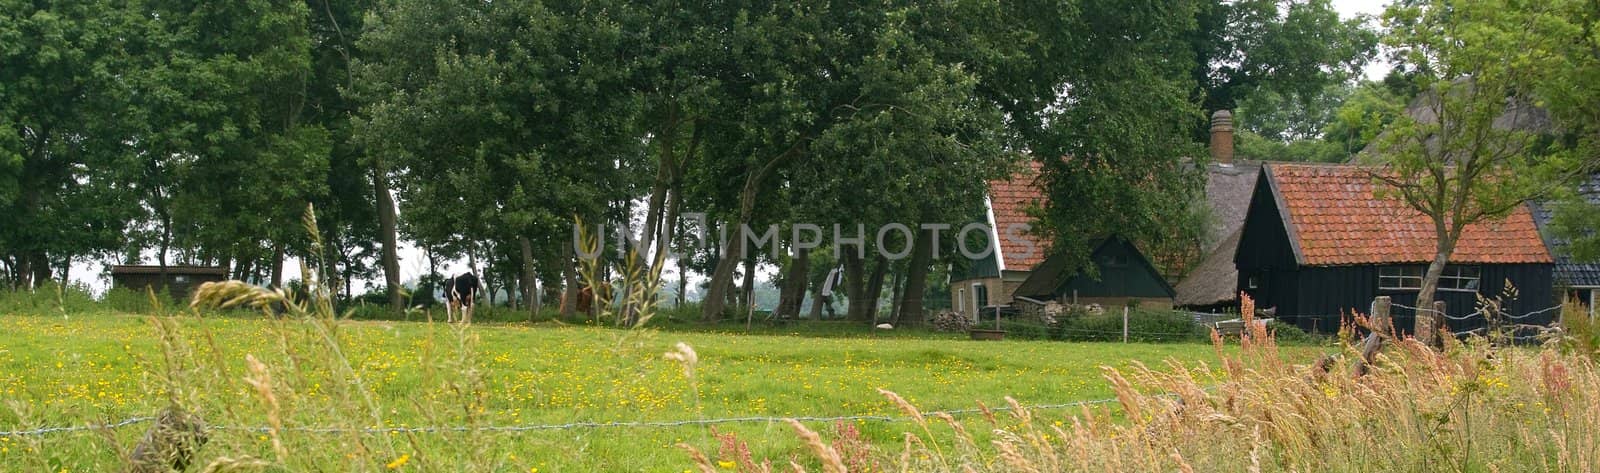 Old Farm Panorama by Fotojan